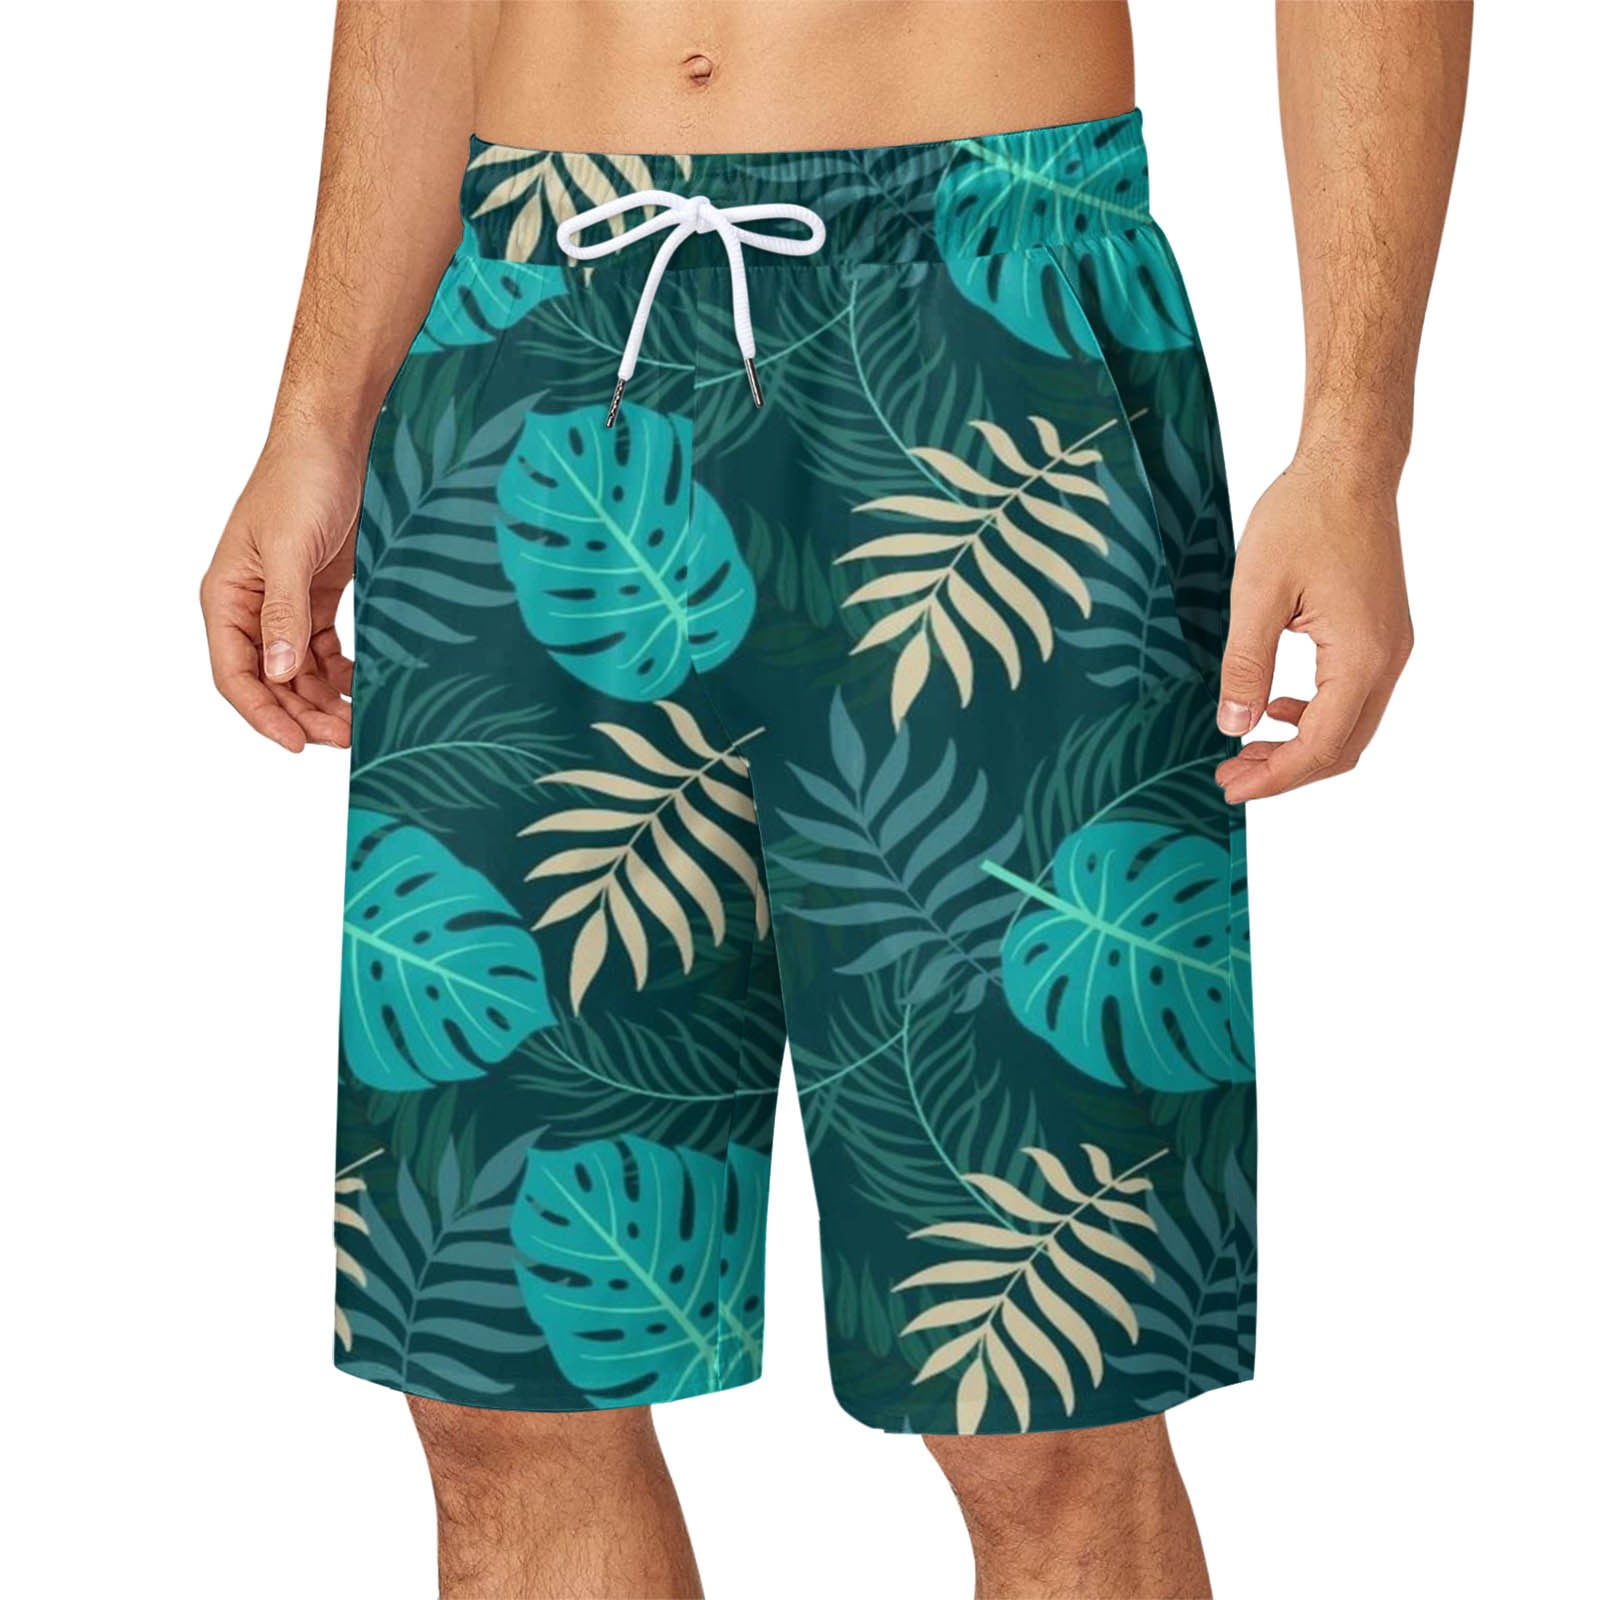 Shorts Men,Mens Boys Short Vintage Swim Trunks With Mesh Lining Swim Suits  Board Shorts(Green,XL) 